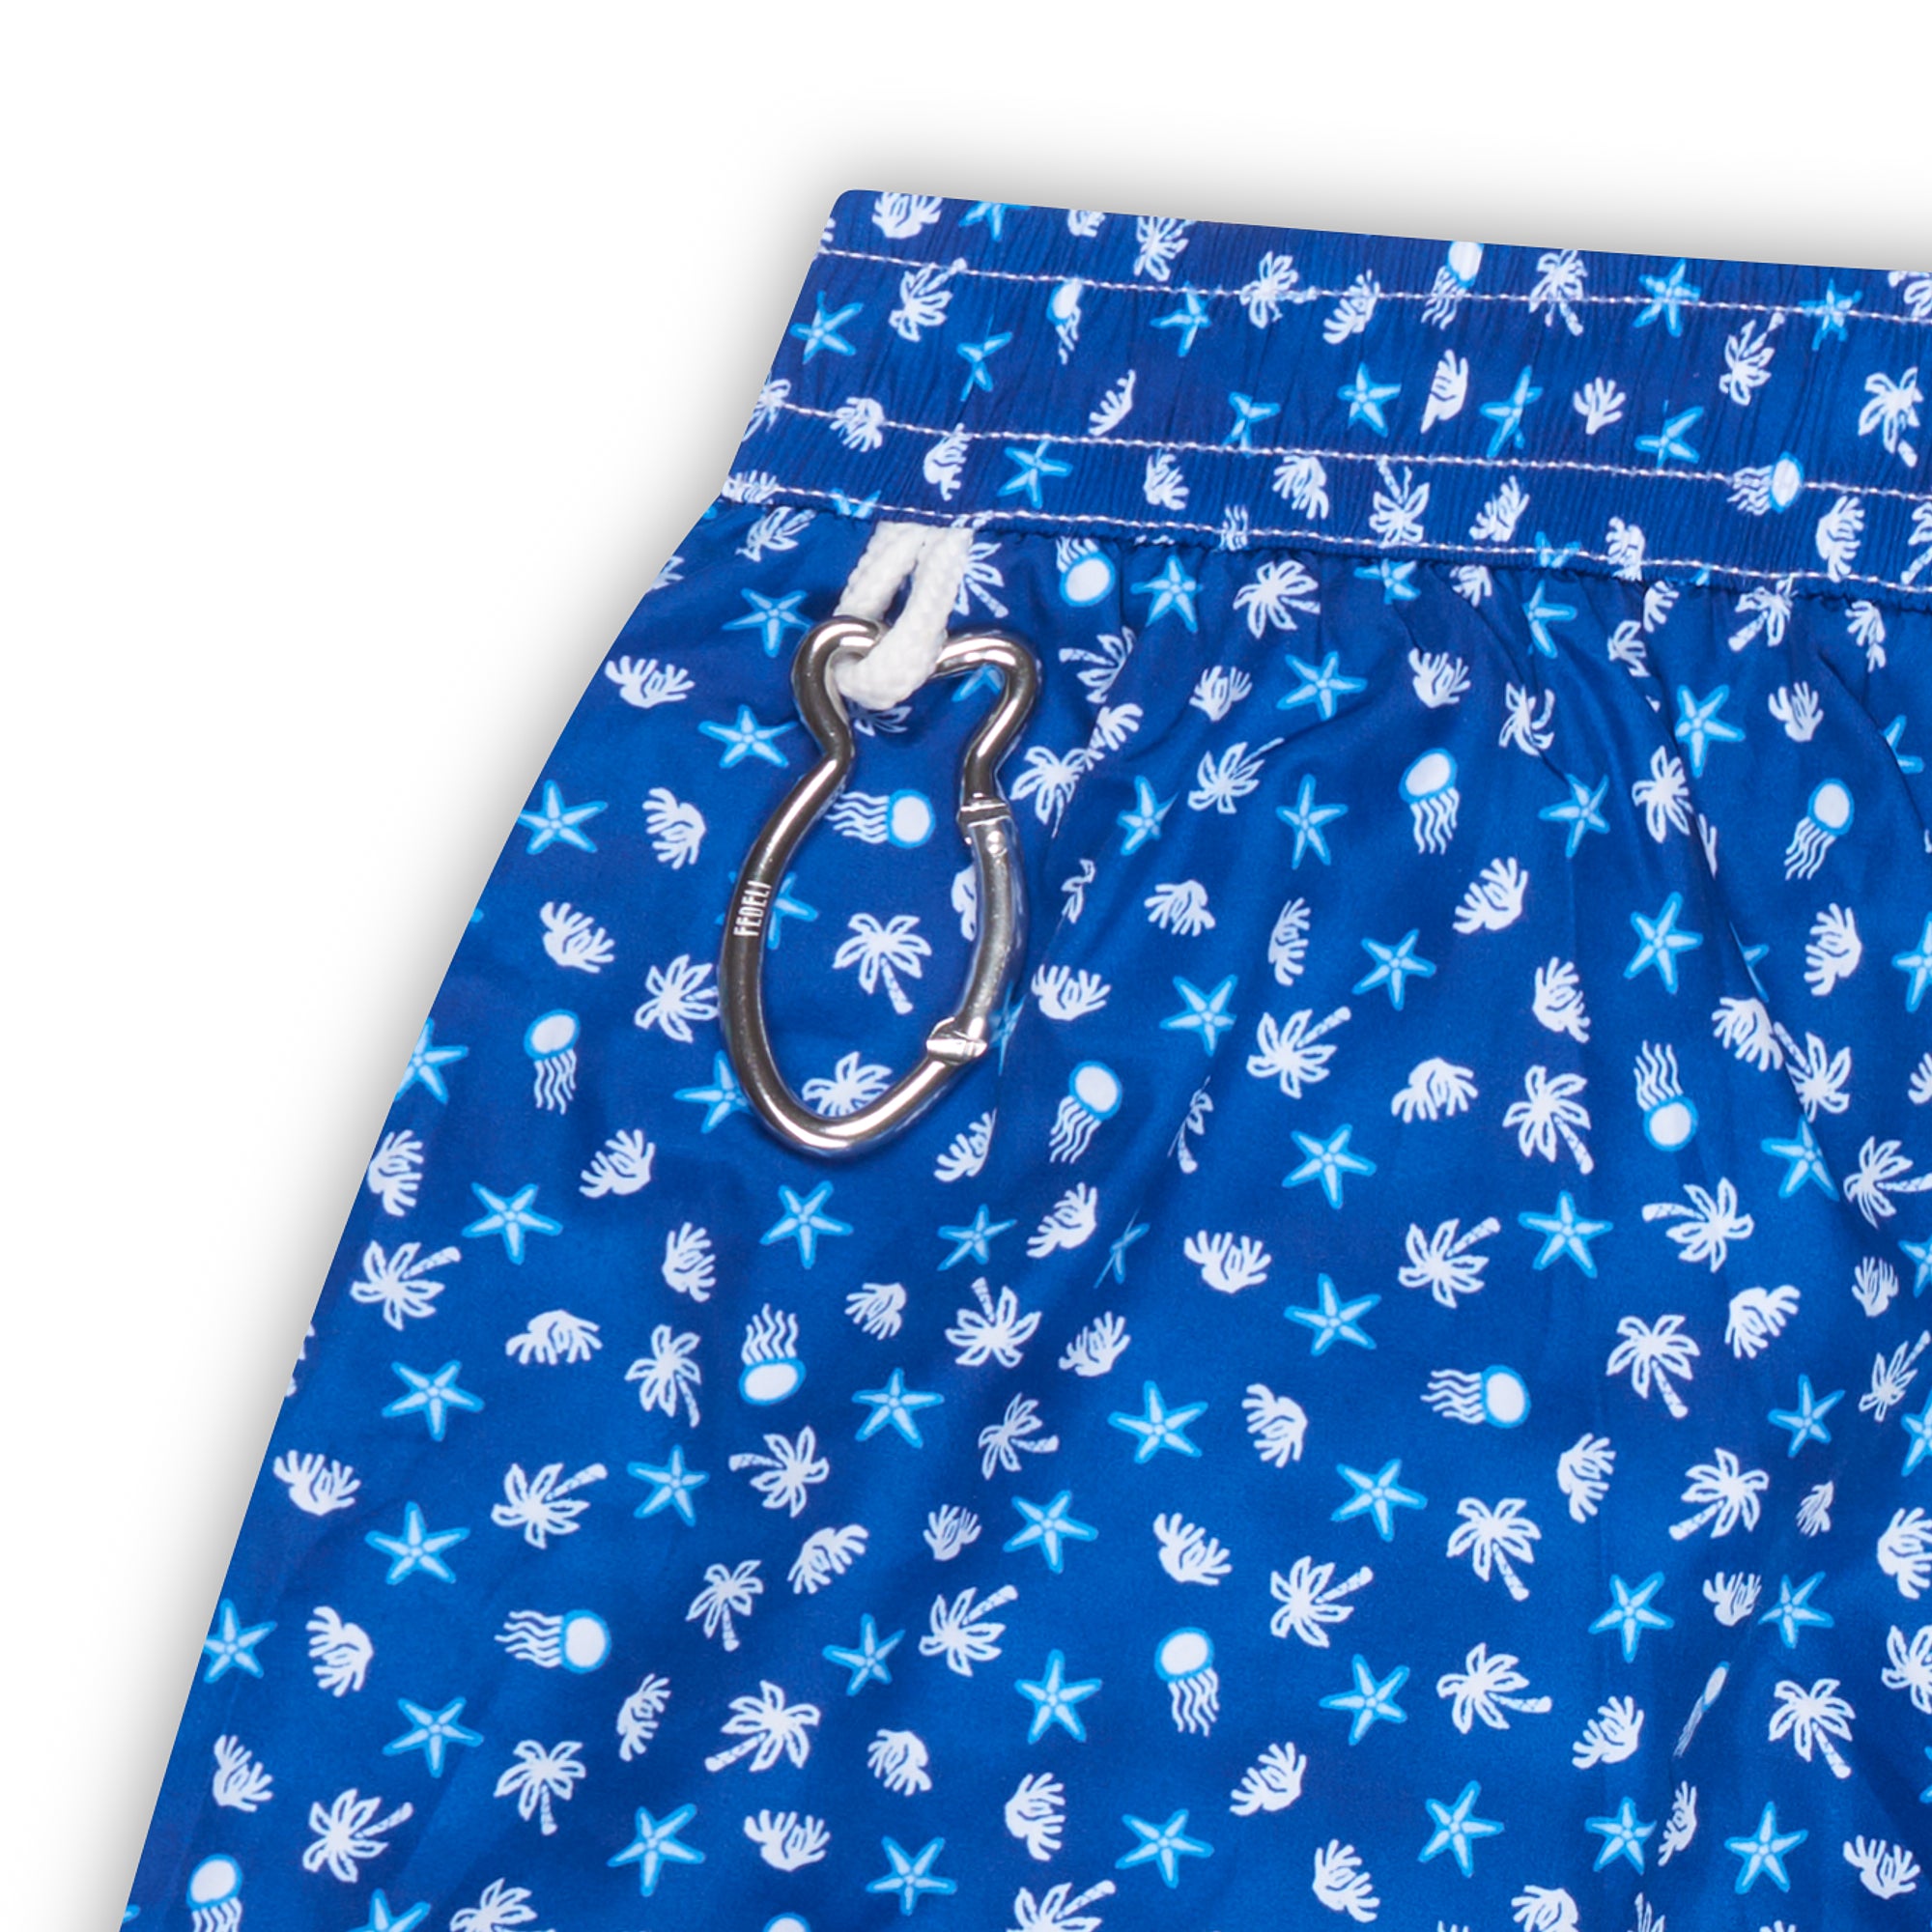 FEDELI Navy Blue Sea Animal Printed Positano Airstop Swim Shorts Trunks NEW 2XL FEDELI